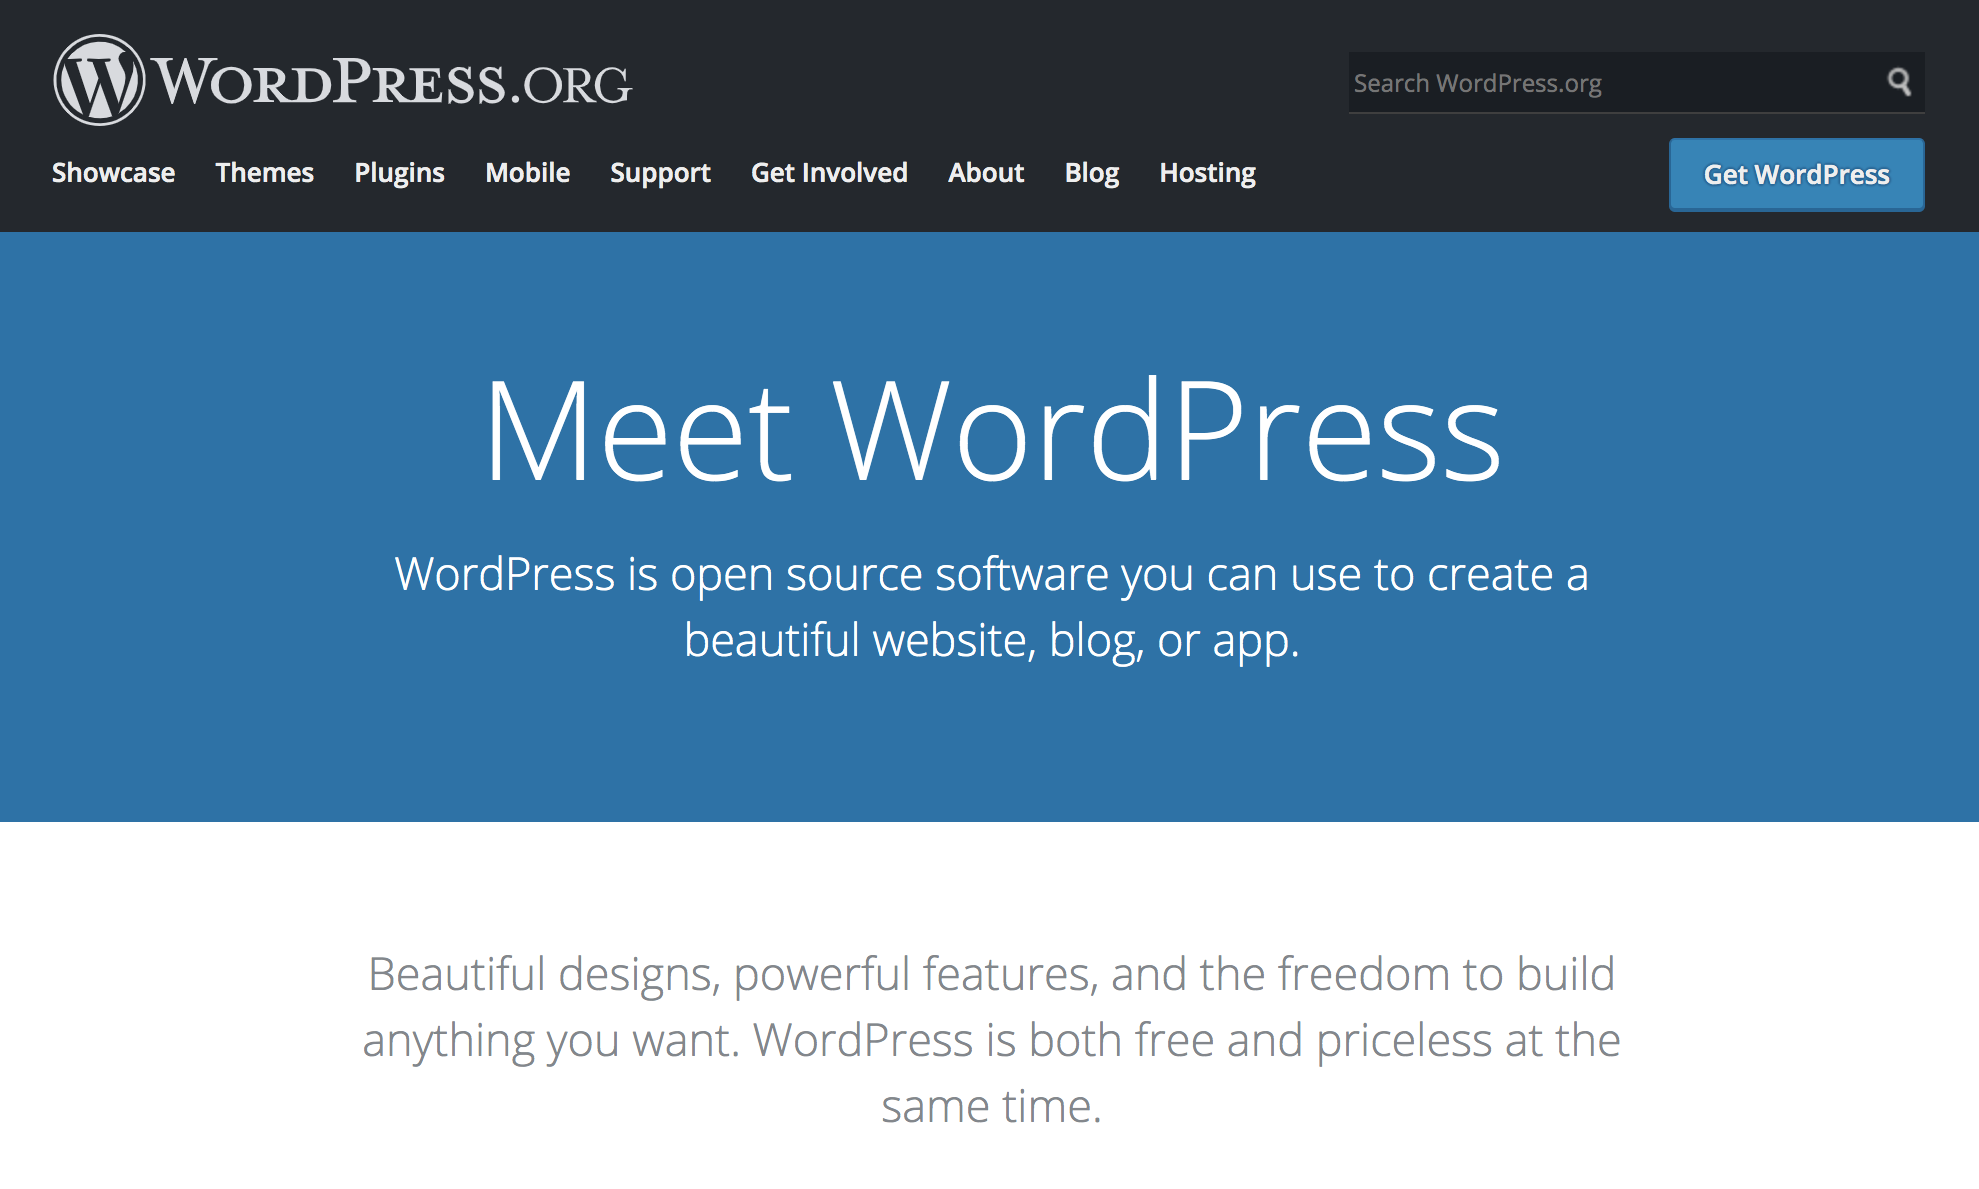 wordpress dot org homepage